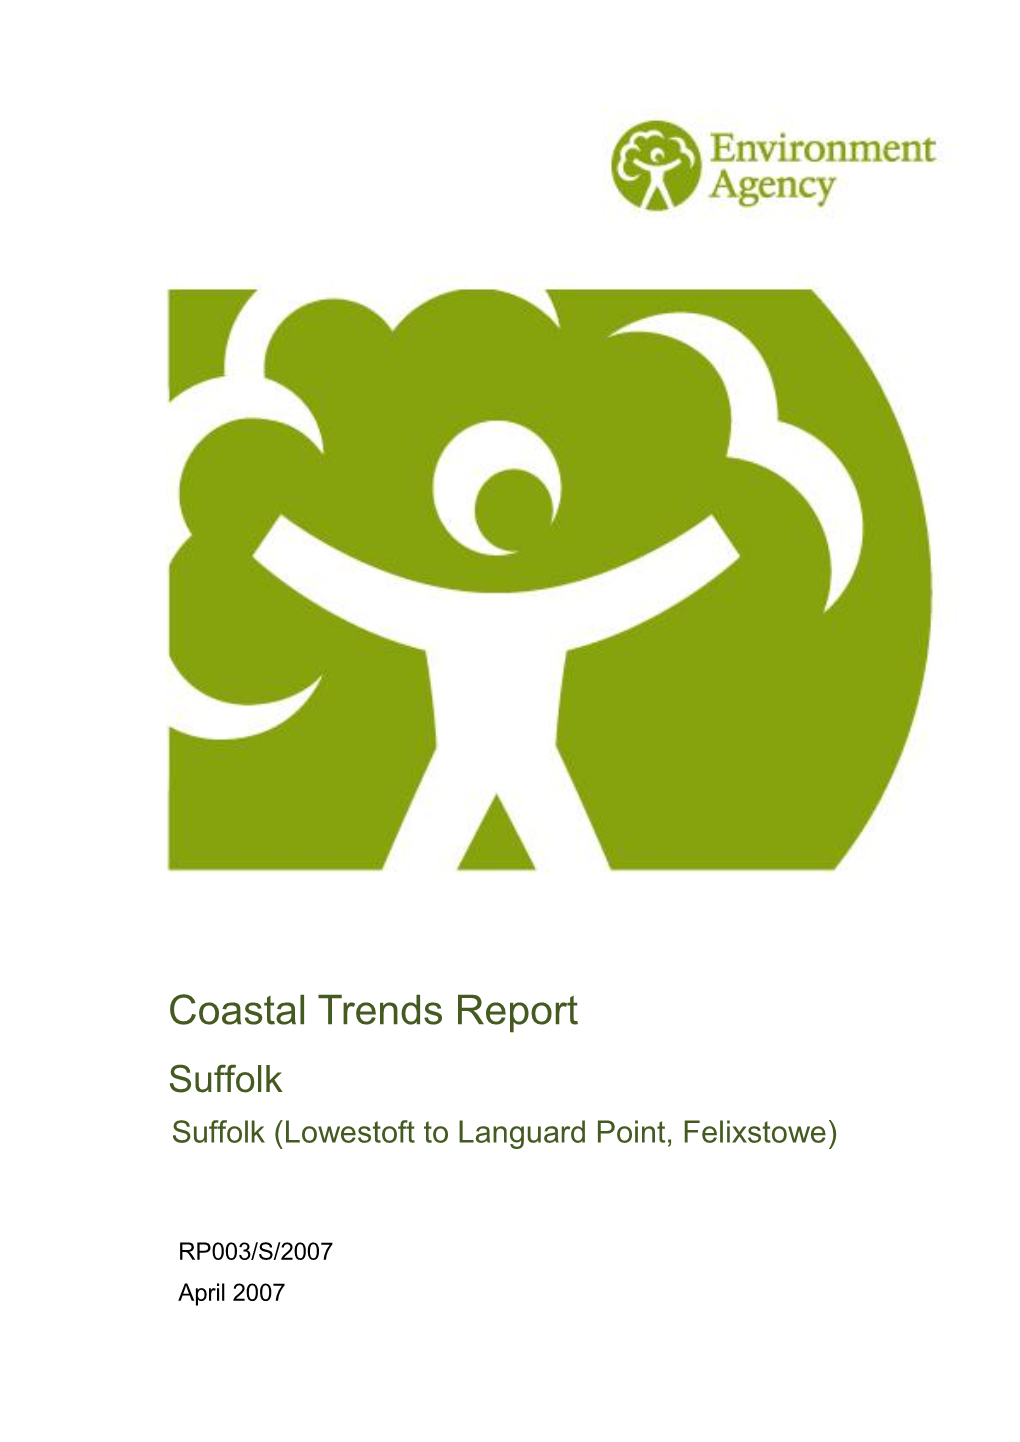 Coastal Trends Report, Suffolk, 2007